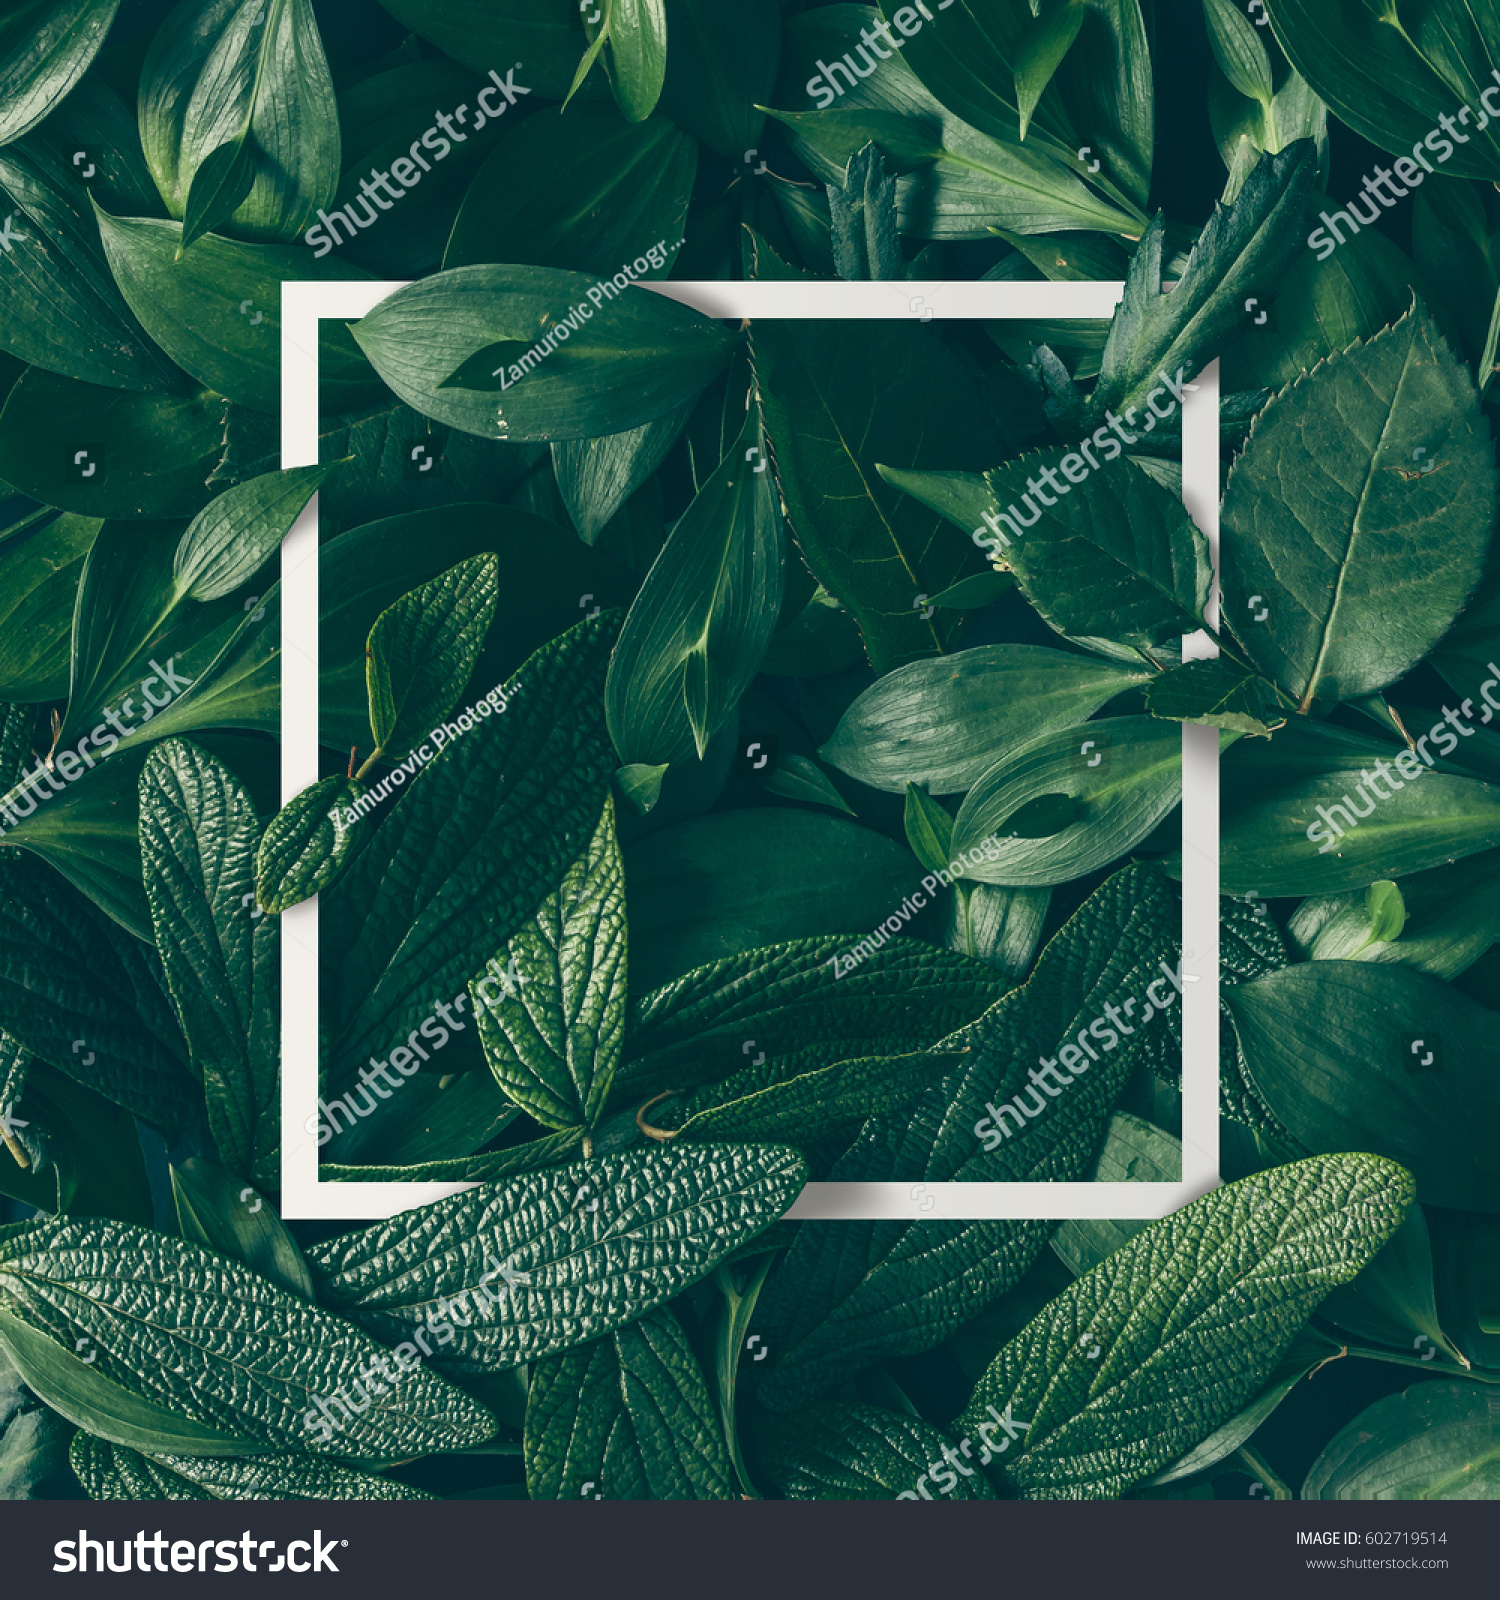 Jungle Green Color - Combinations, HEX Code - Shutterstock